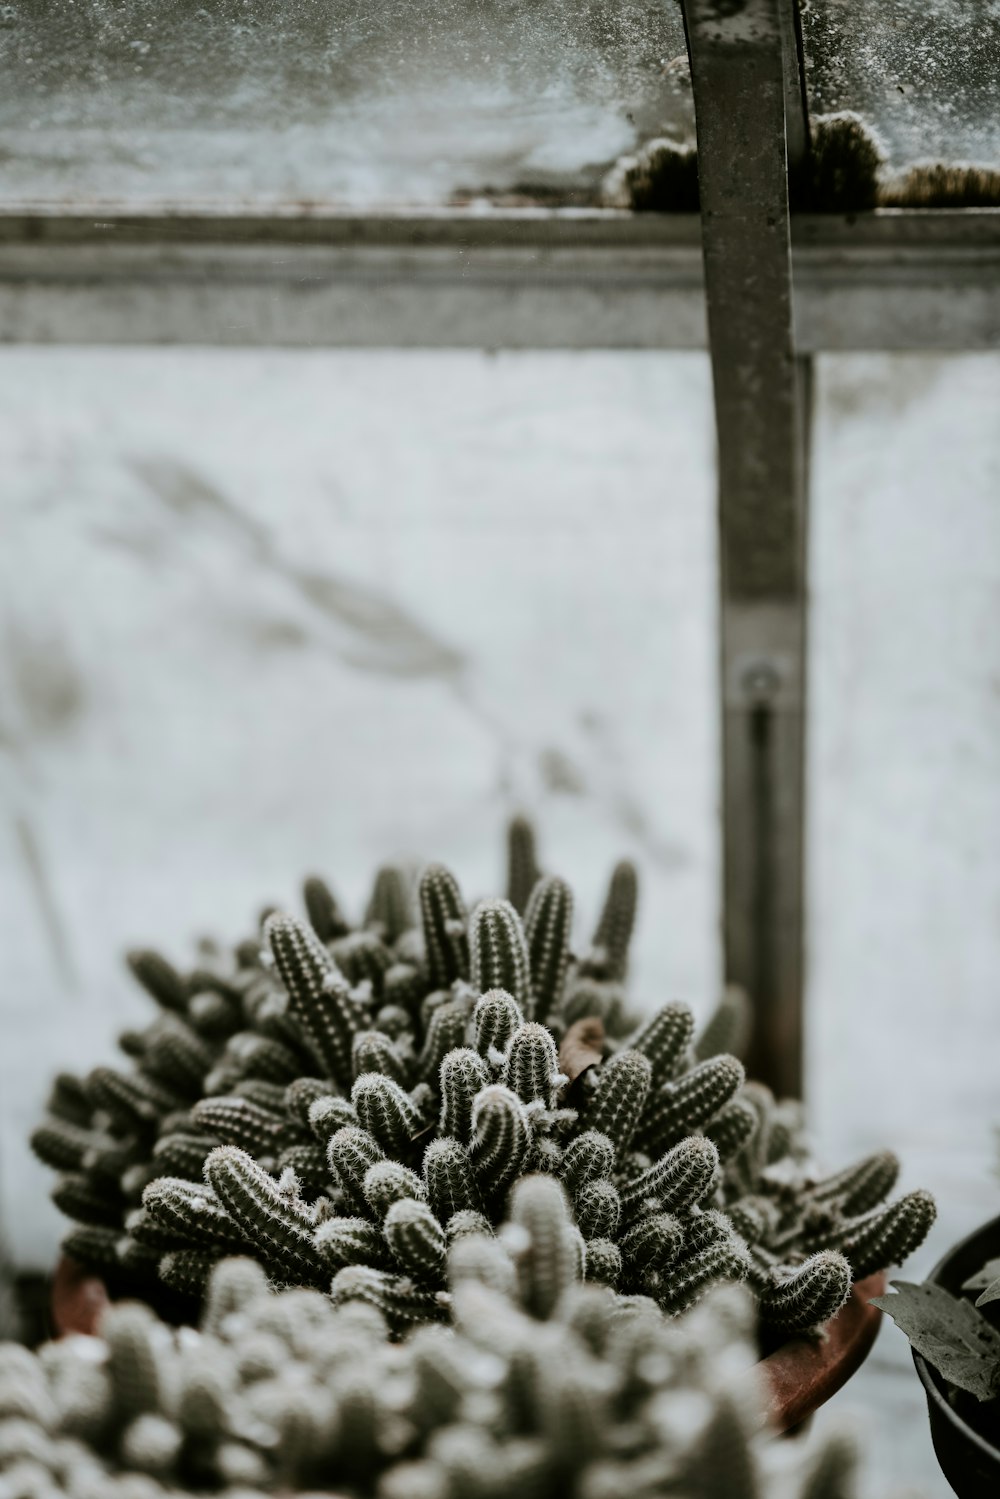 selective focus photography of cactus plants near window